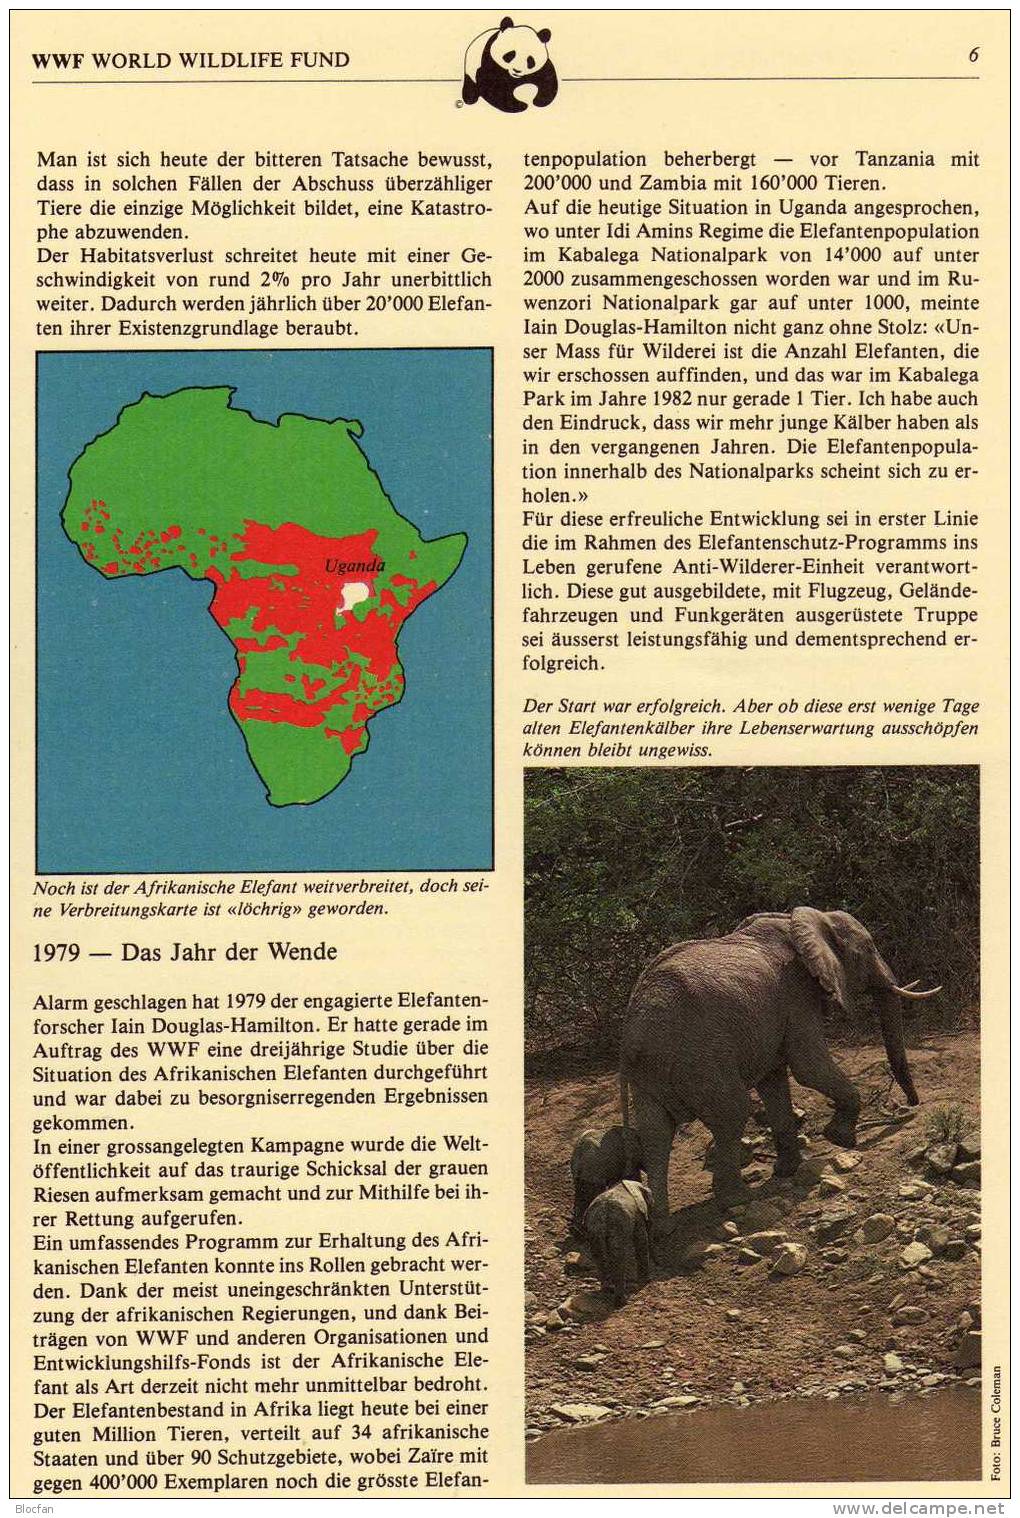 WWF Elefanten in Afrika Uganda 361/4 ** plus FDC 43€